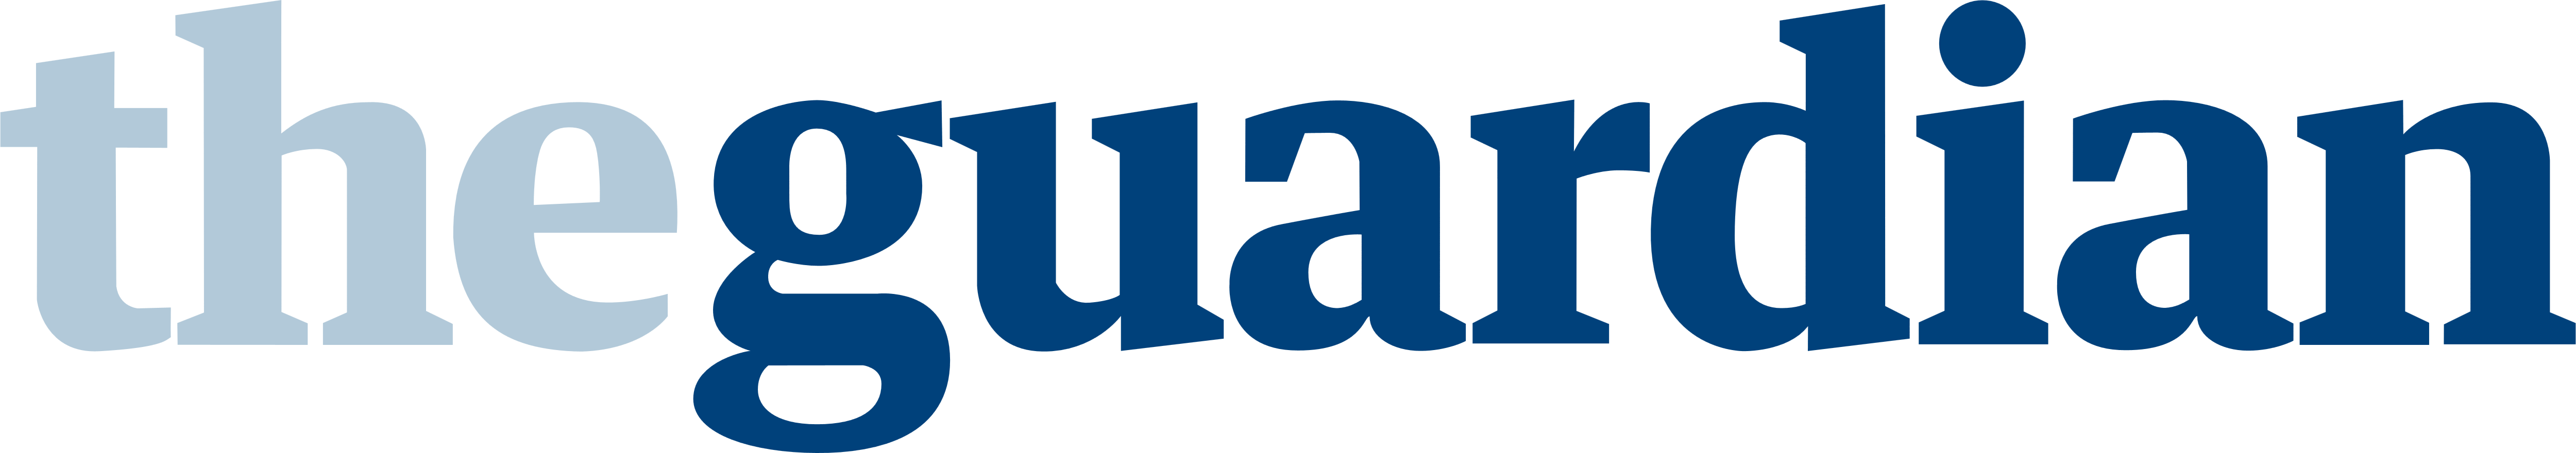 The Guardian Logo - The Guardian - Logos Download